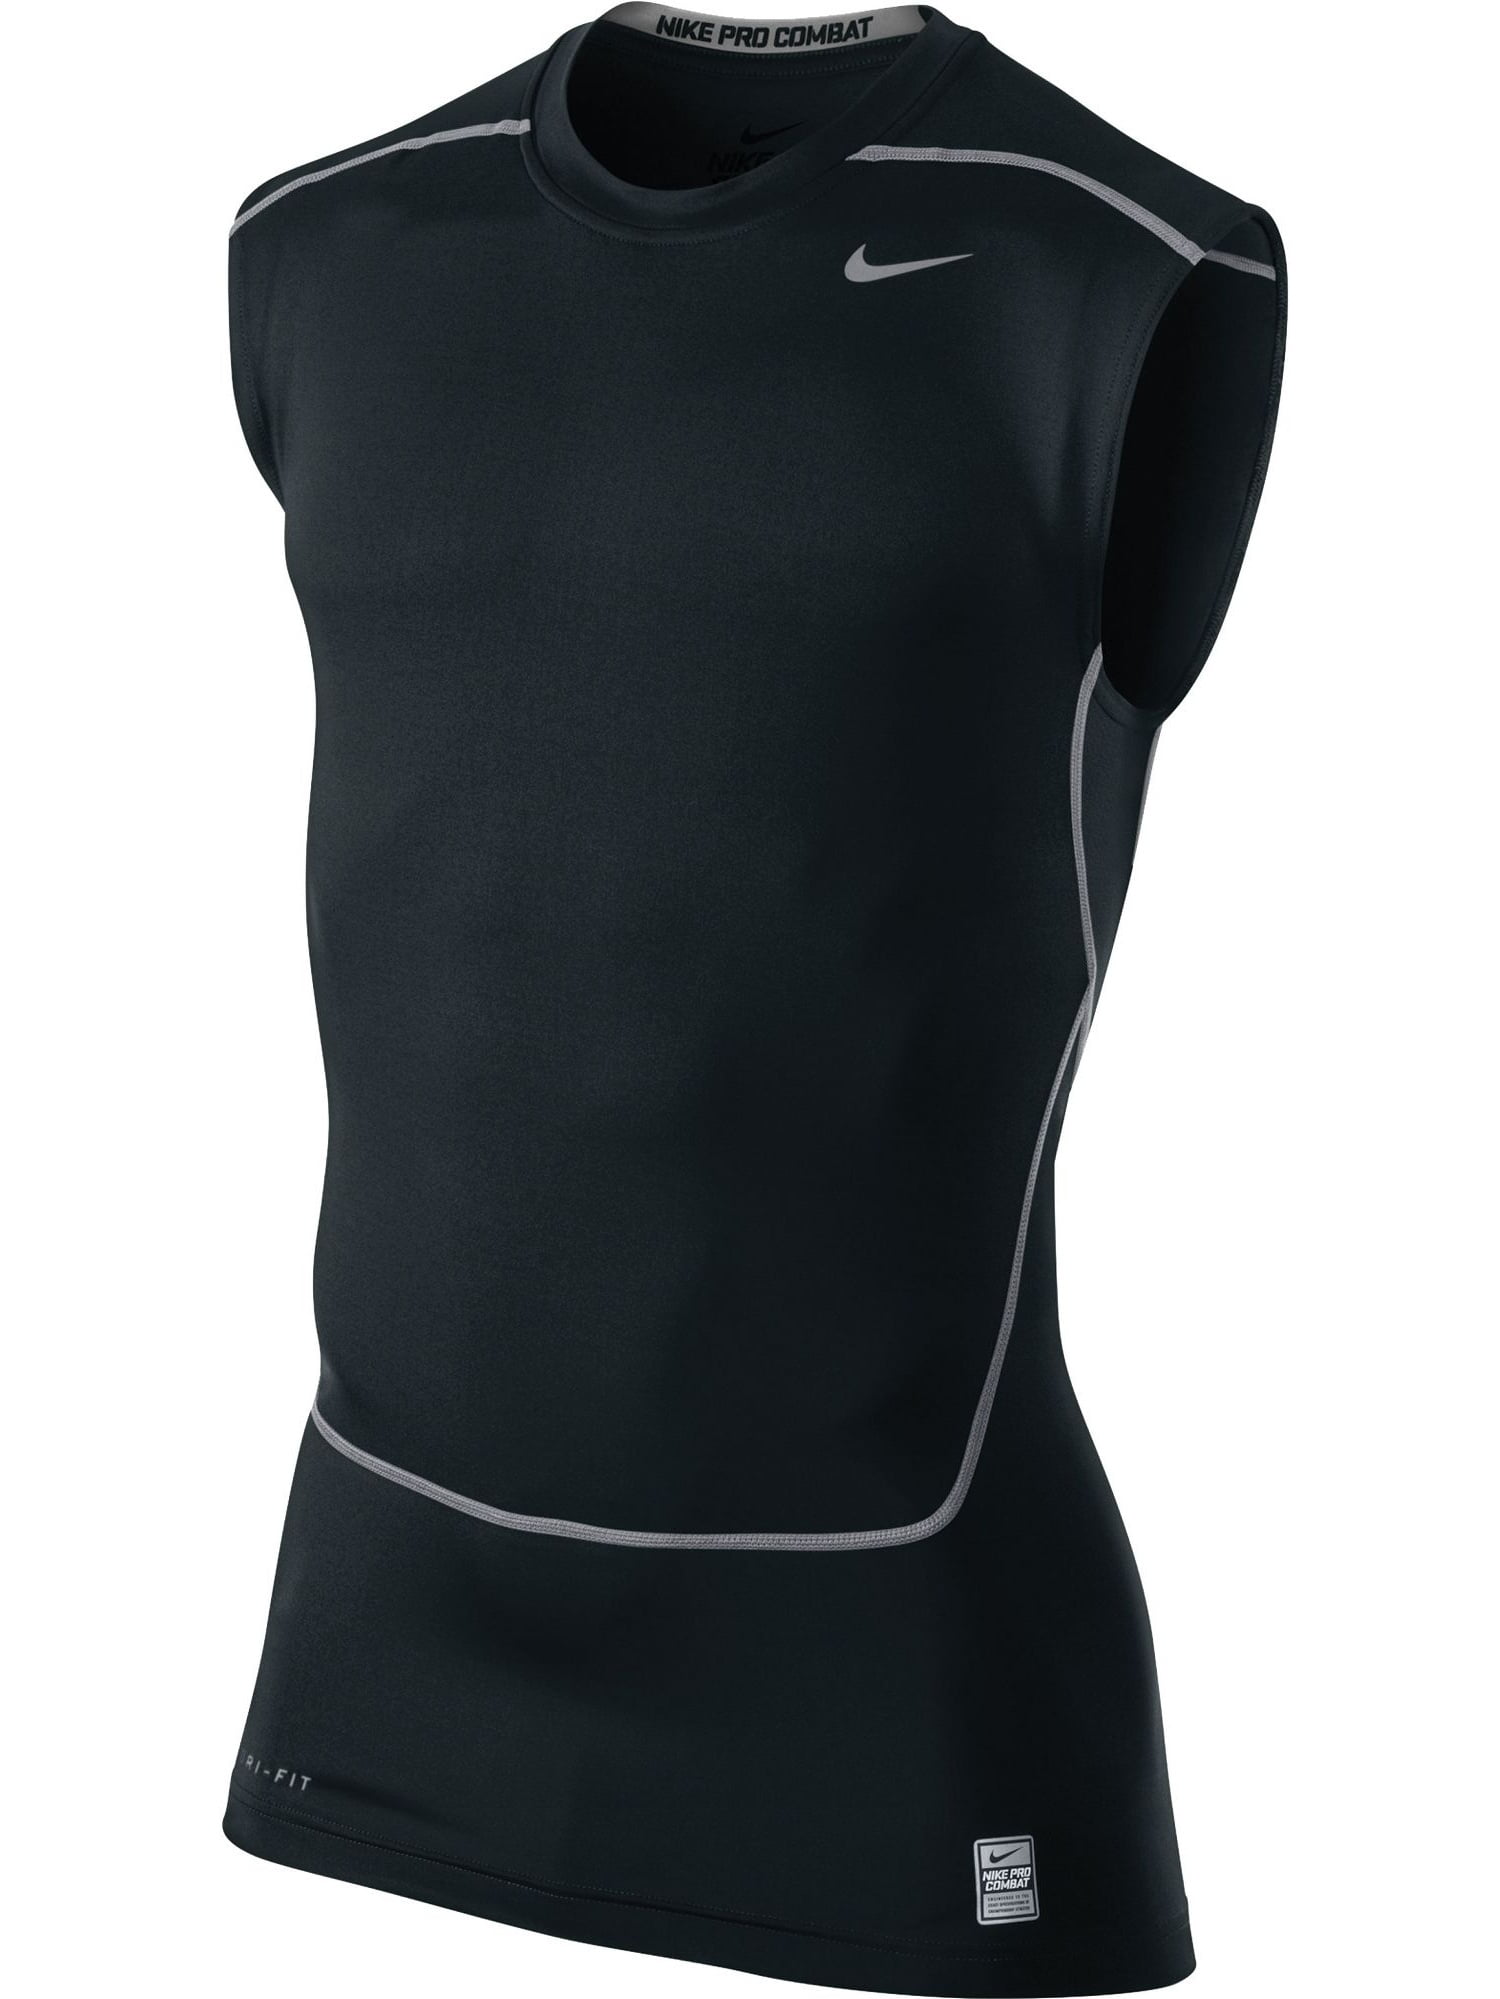 Nike Men's 2.0 Compression Training Shirt - Walmart.com